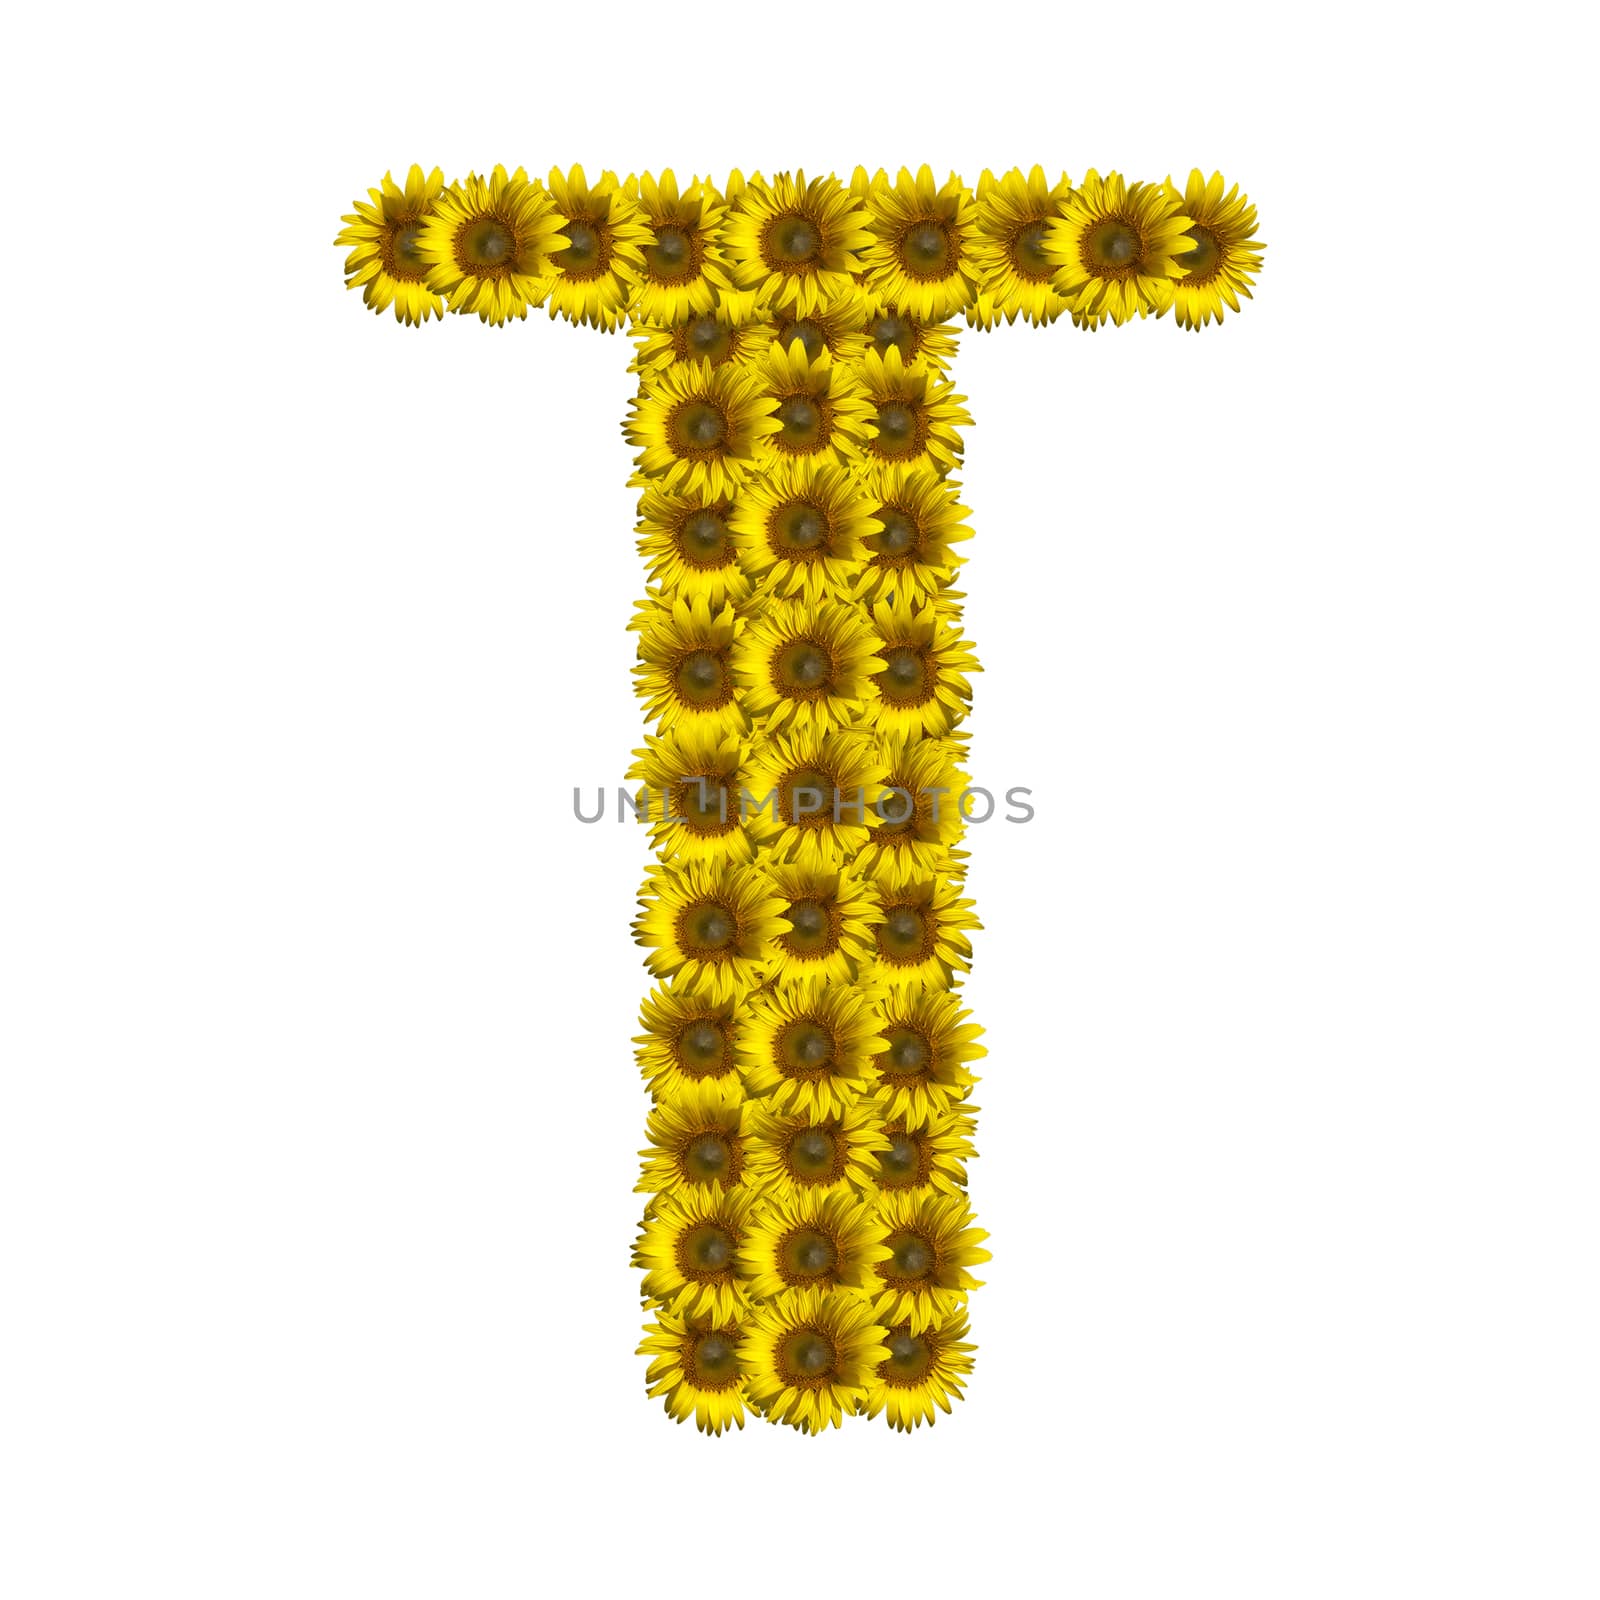 Isolated sunflower alphabet T by Exsodus